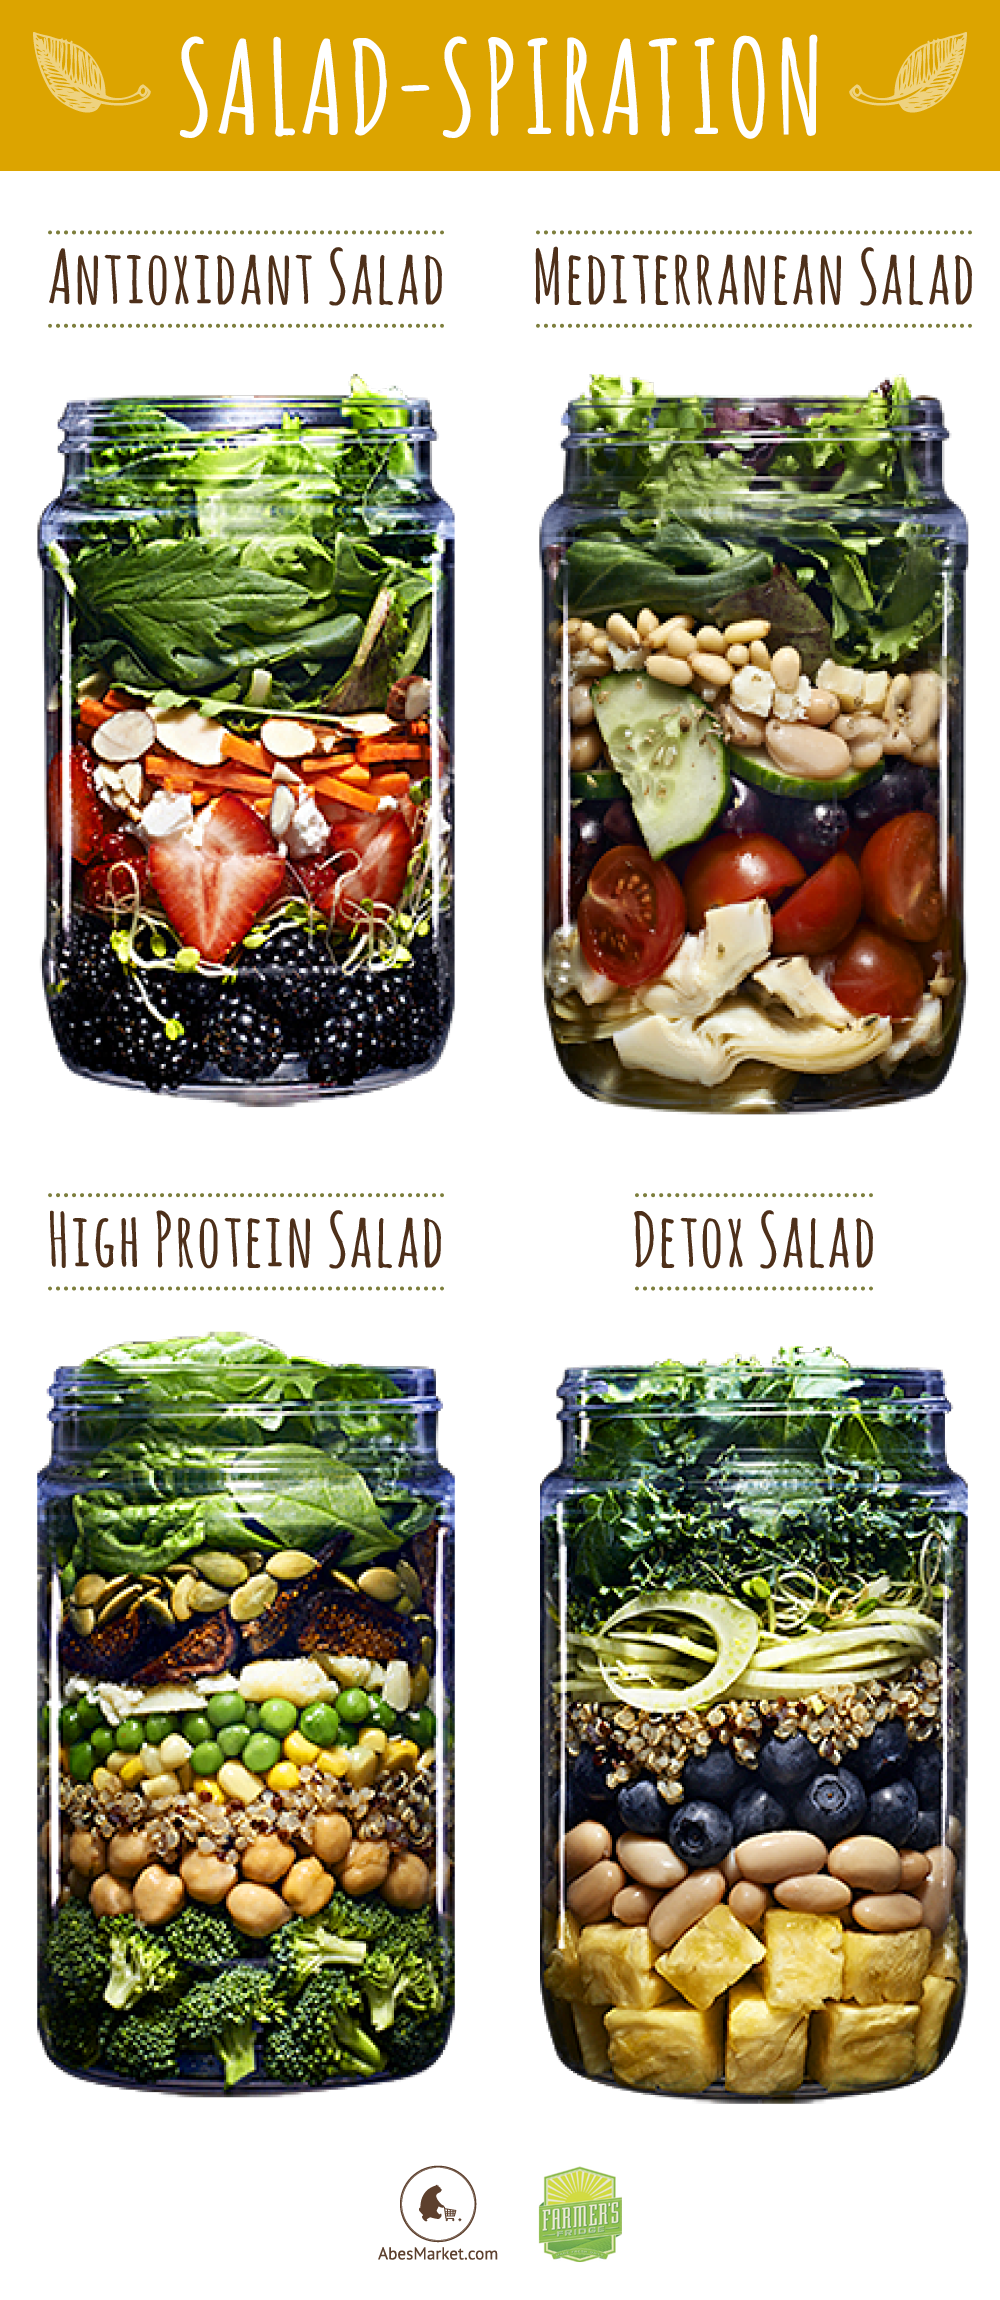 30 Mason Jar Recipes: A Month Worth of “Salad in a Jar” Recipes